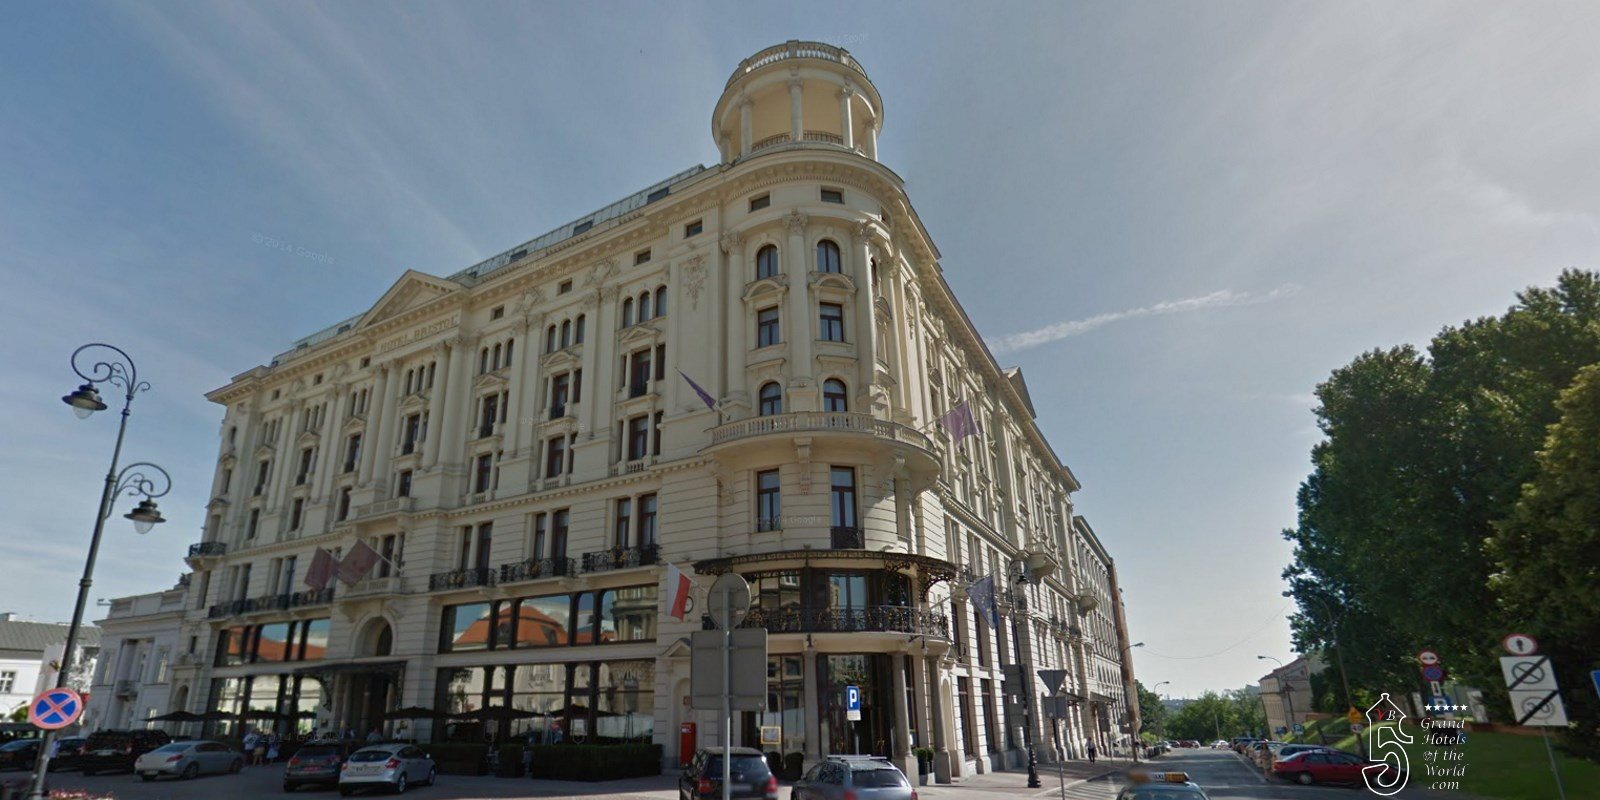 Hotel Bristol in Warsaw